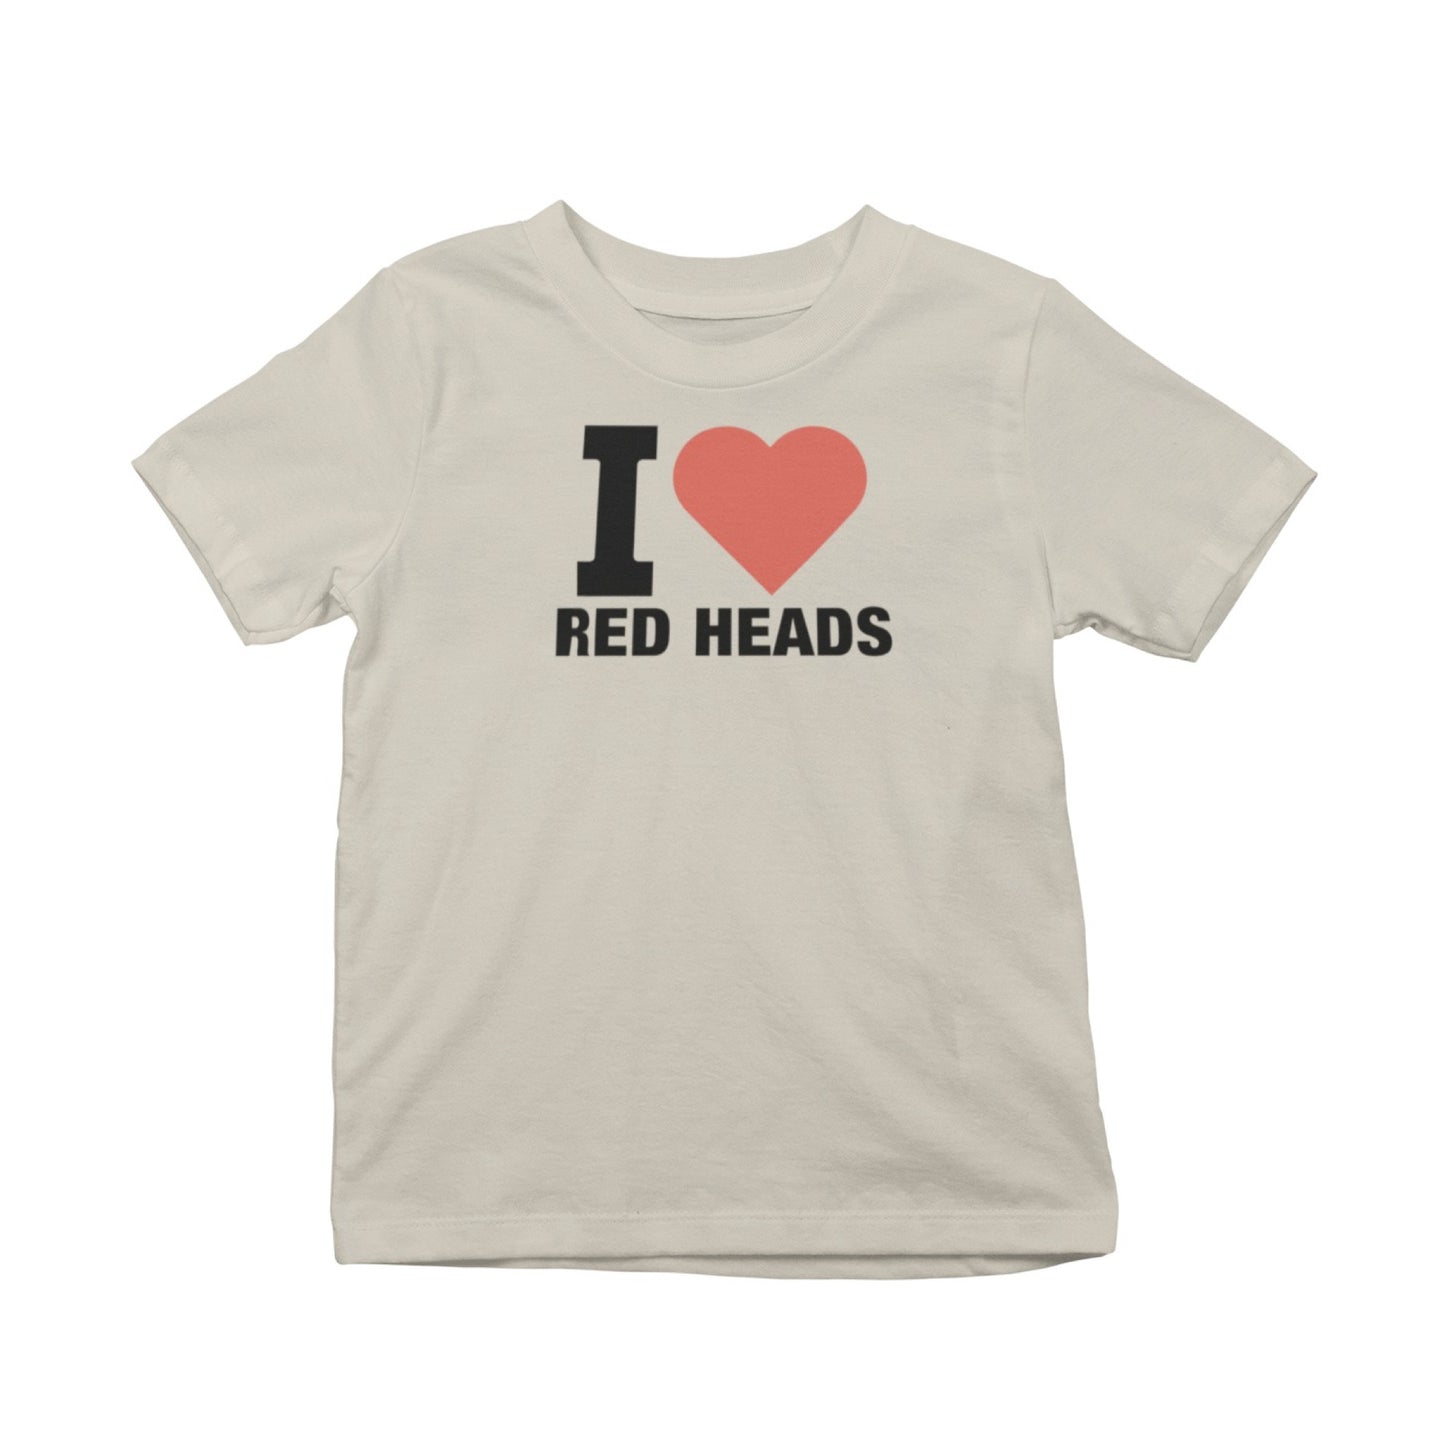 I Heart Red Heads T-Shirt